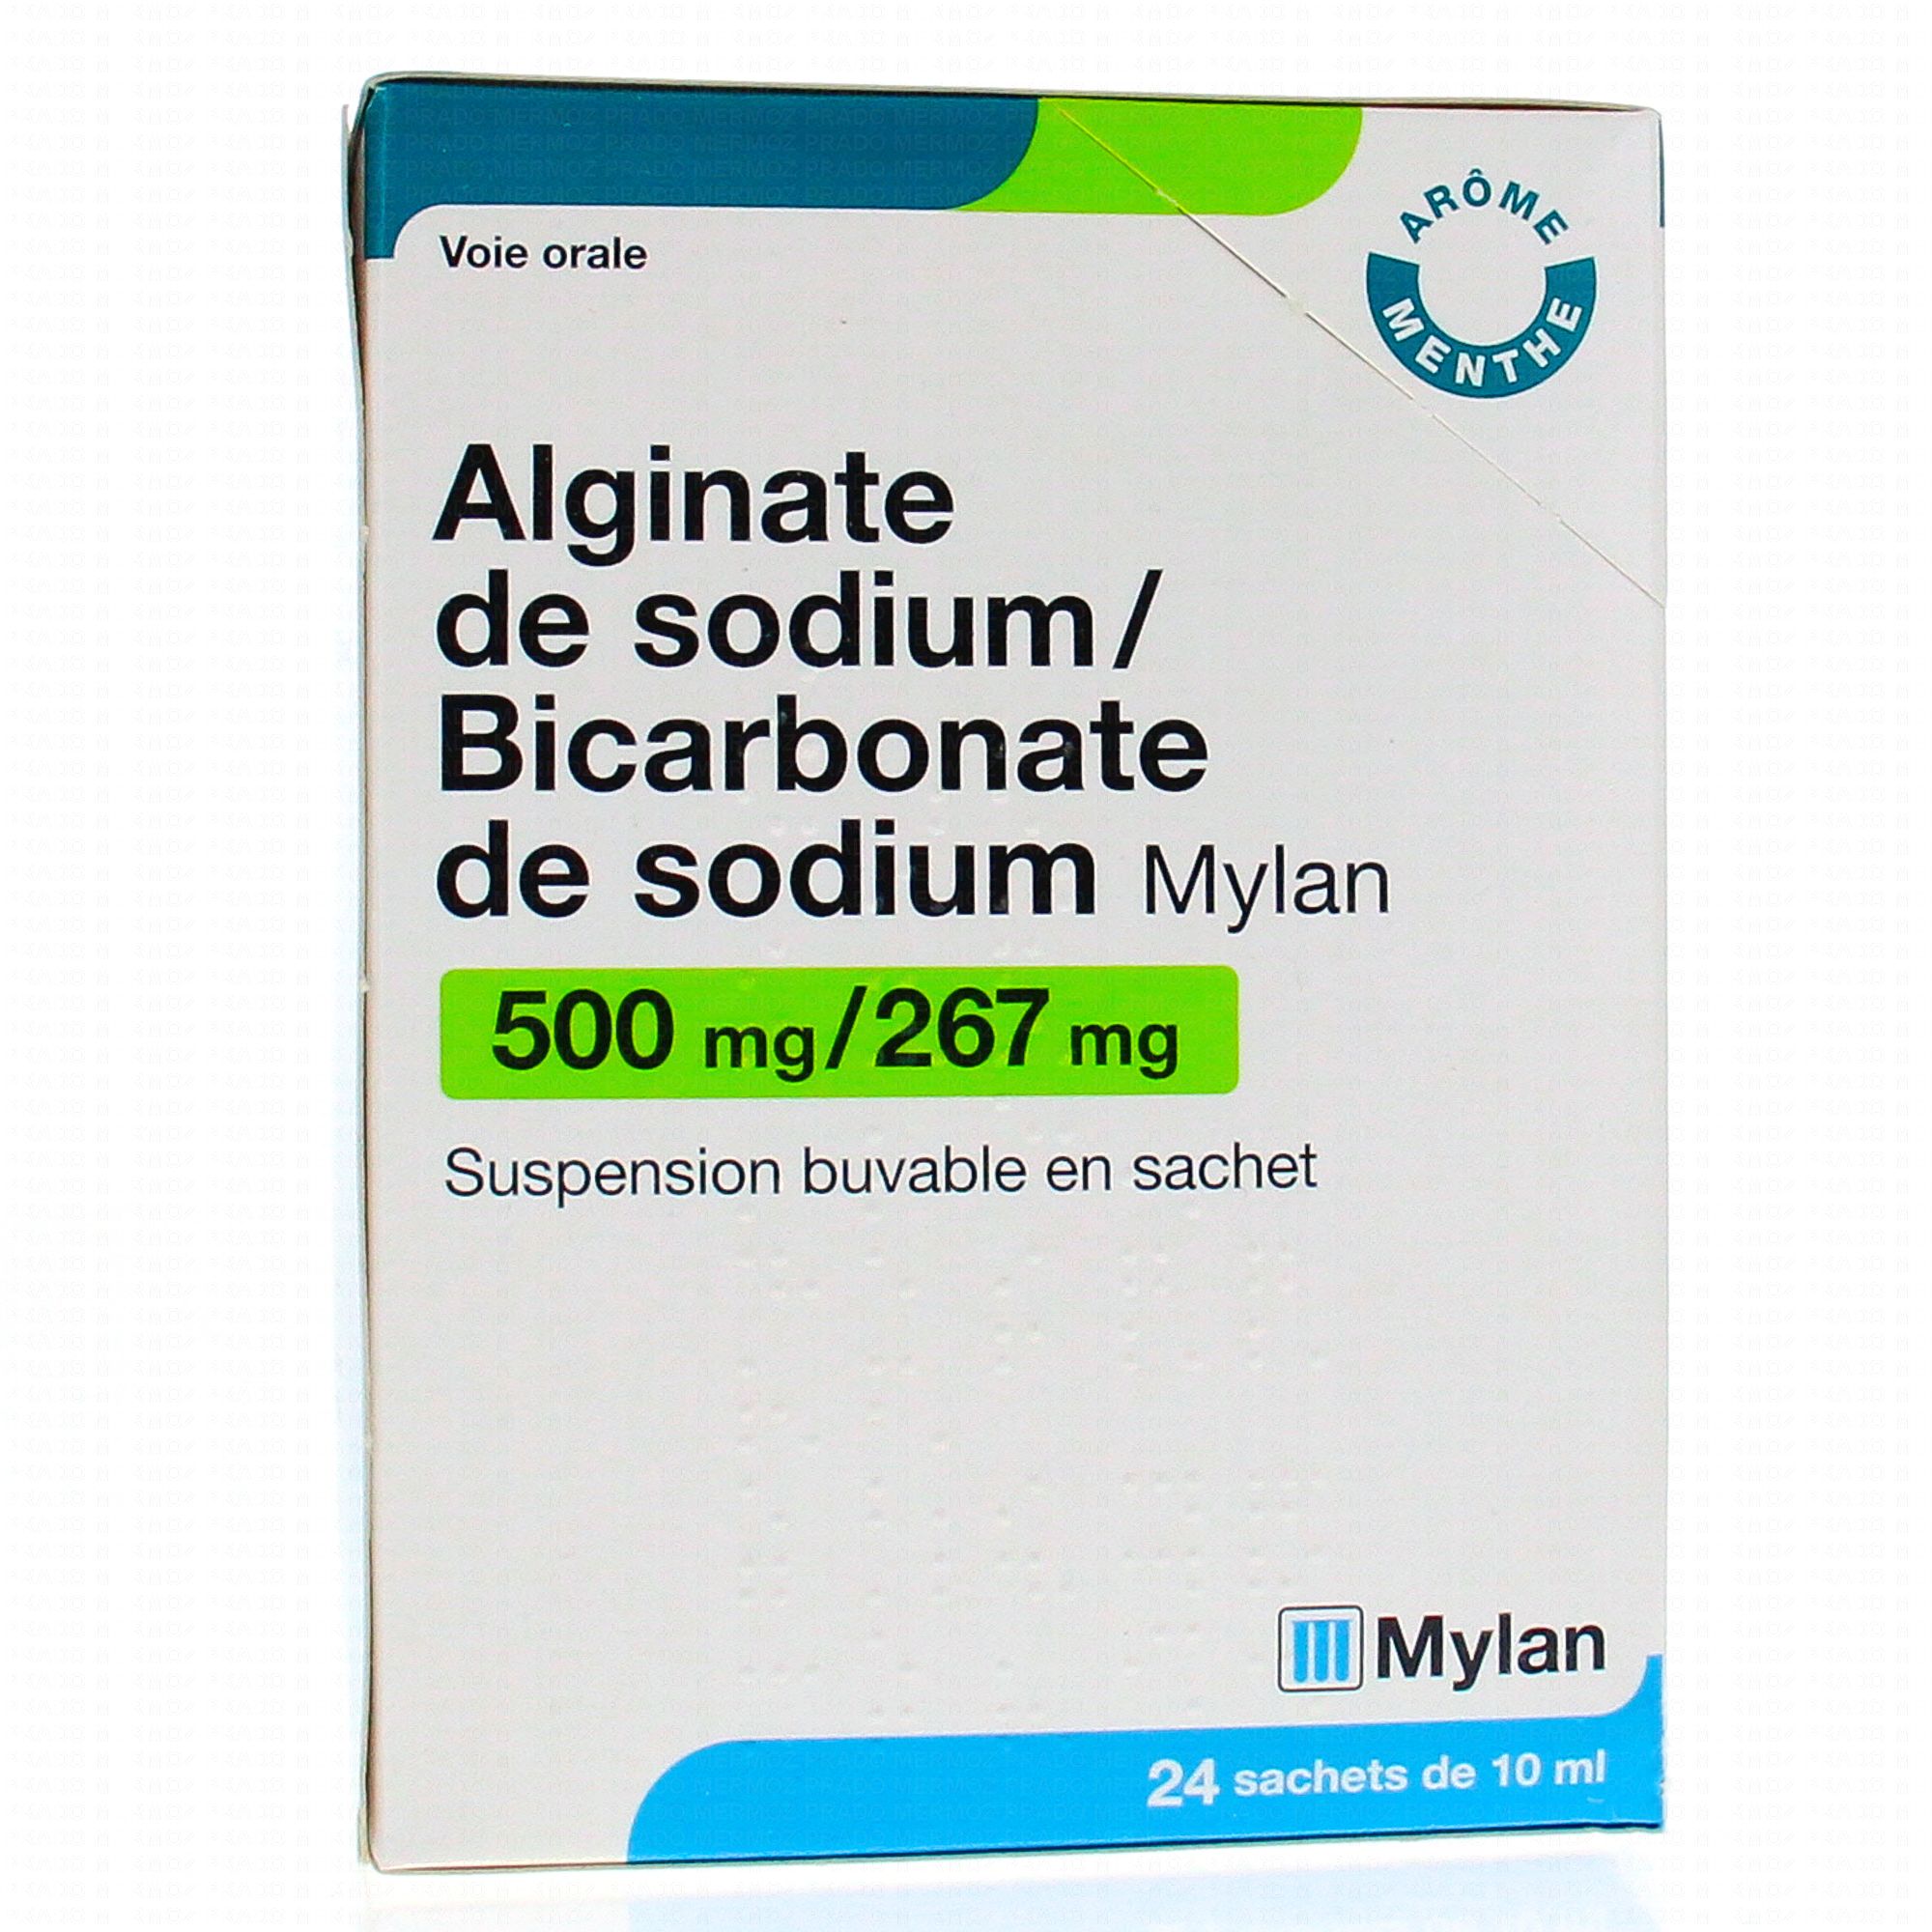 Alginate de sodium / Bicarbonate de sodium Suspension buvable en